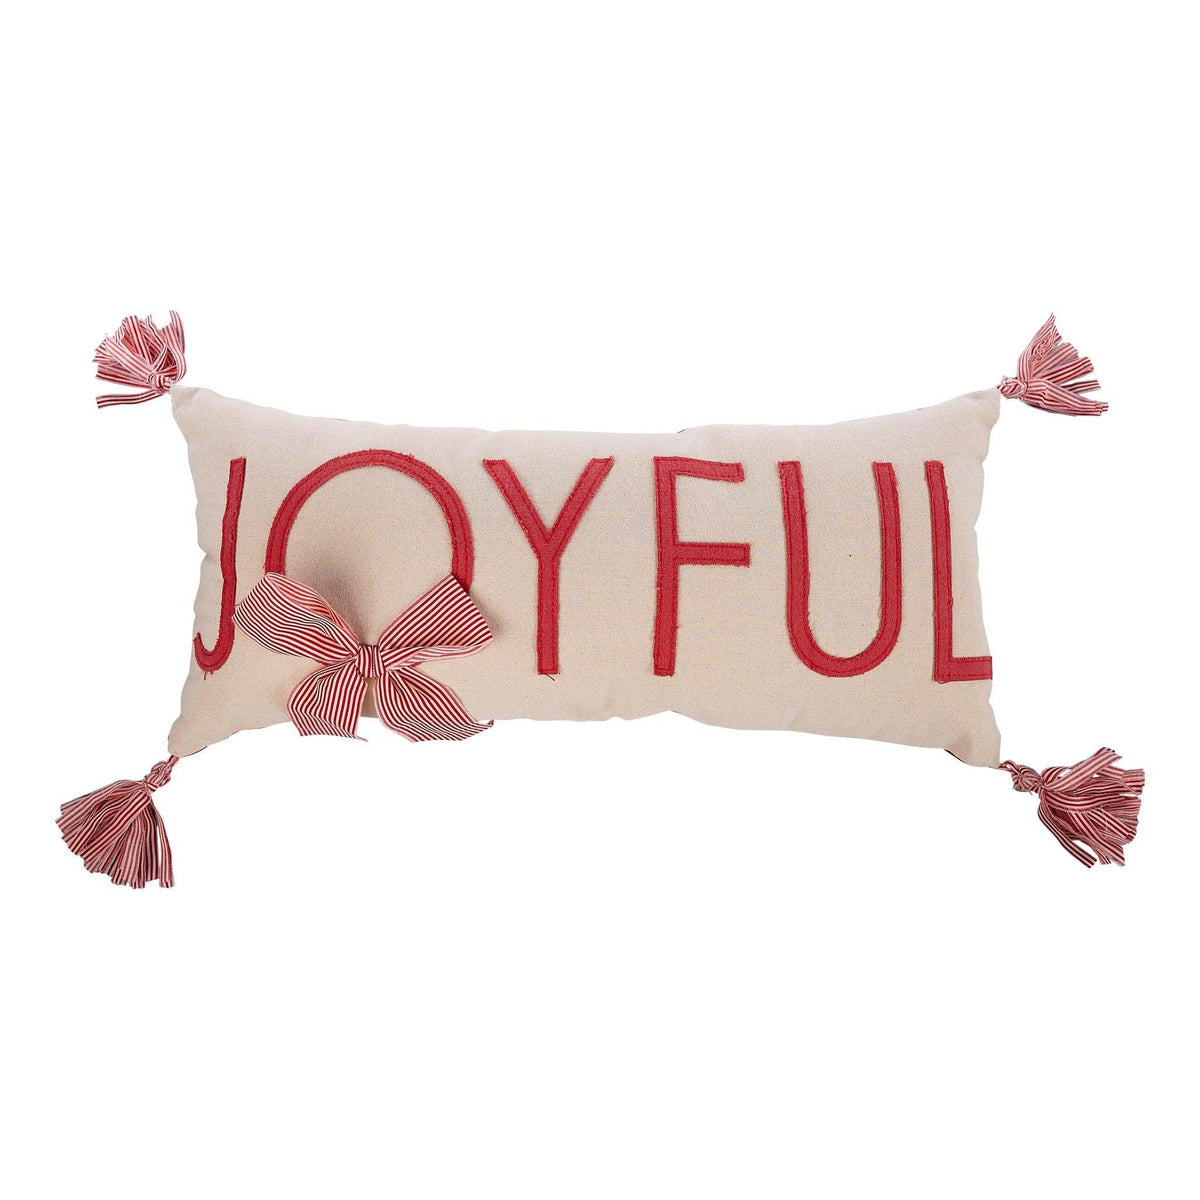 Joyful Pillow - GLORY HAUS 